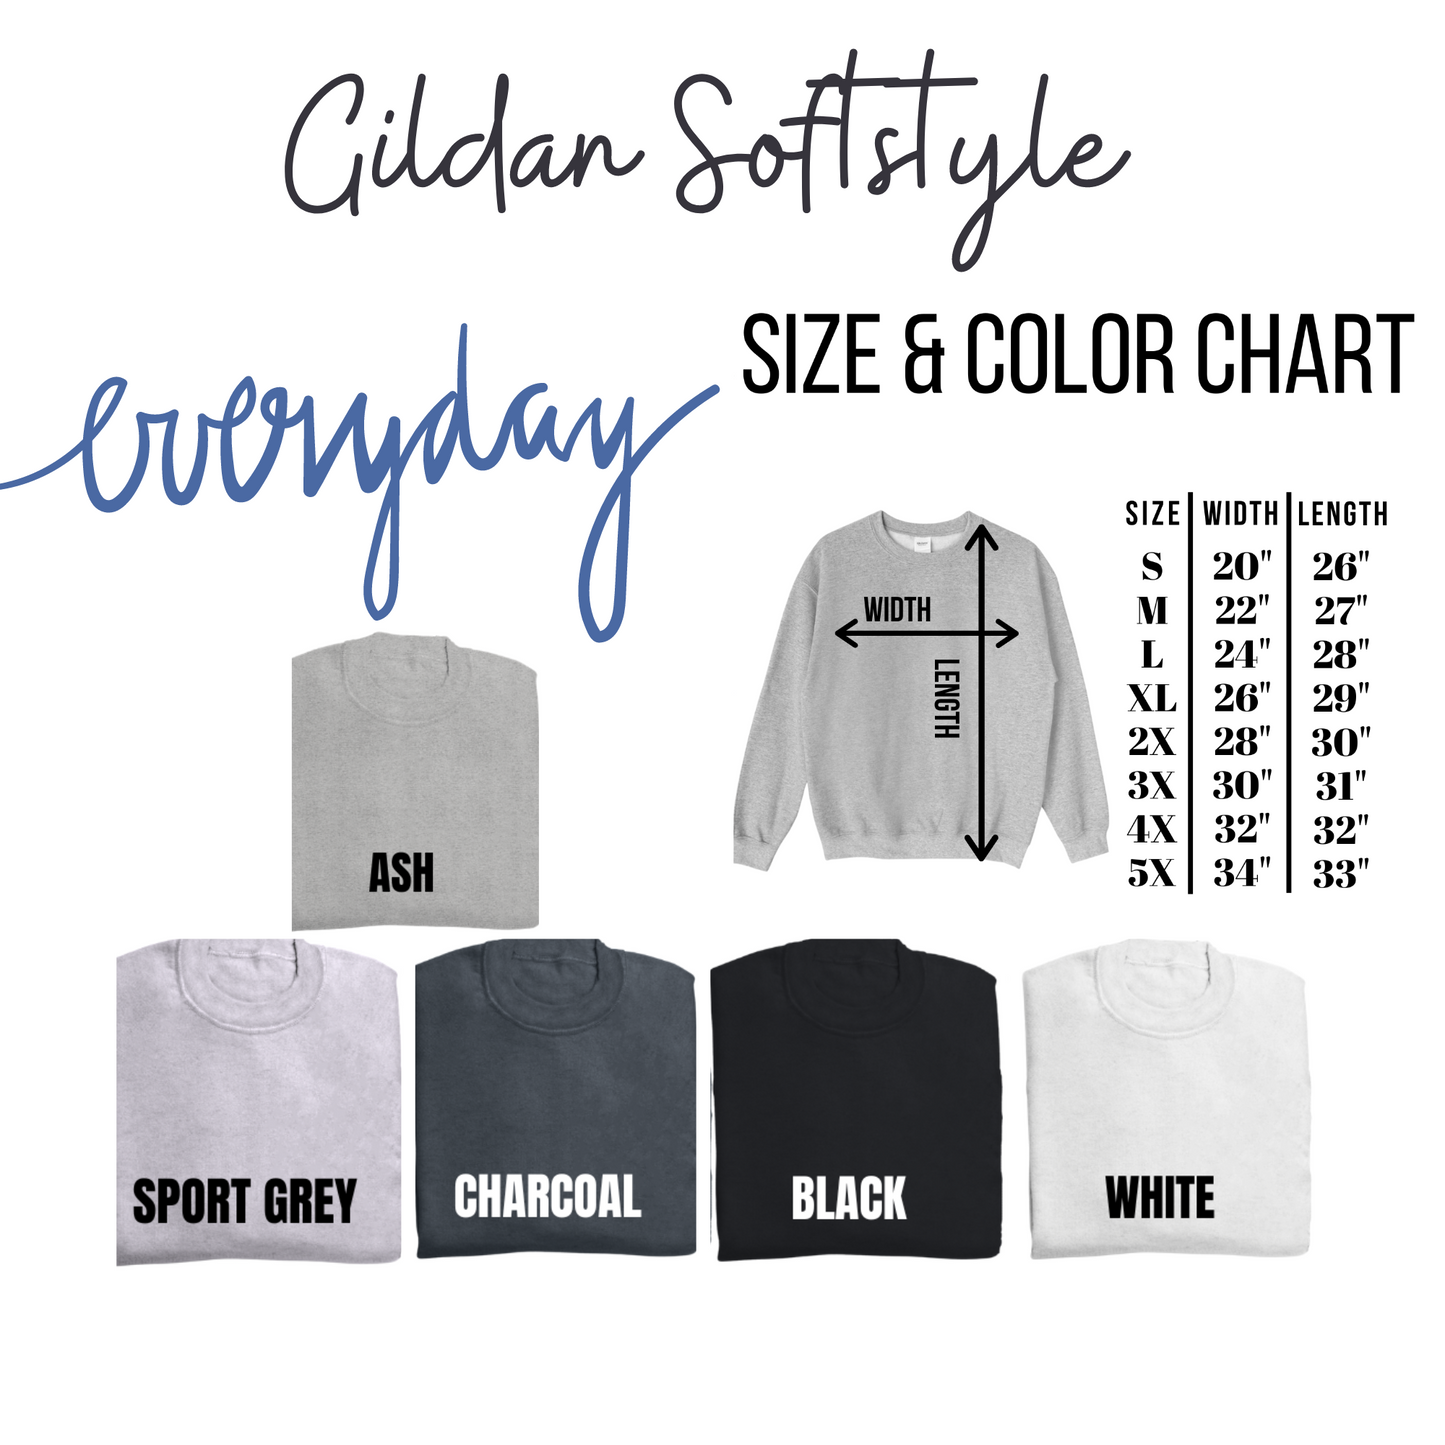 Be Grateful Leopard Box Gildan Softstyle T-Shirt or Sweatshirt